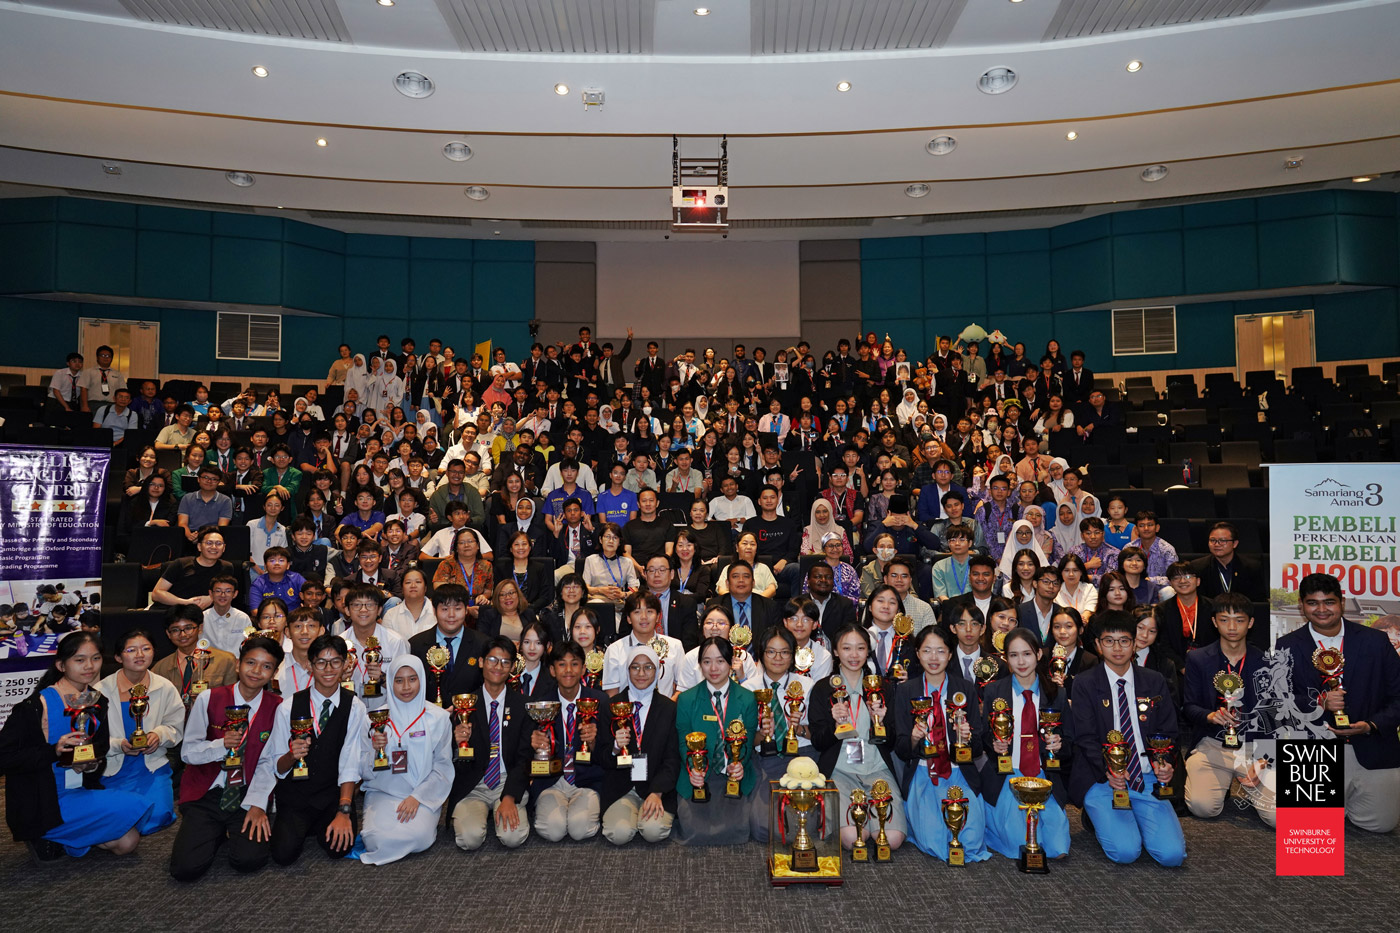 St Joseph’s Private School and Kolej Yayasan Saad Melaka win 19th Swinburne Sarawak Inter-School Debating Championship